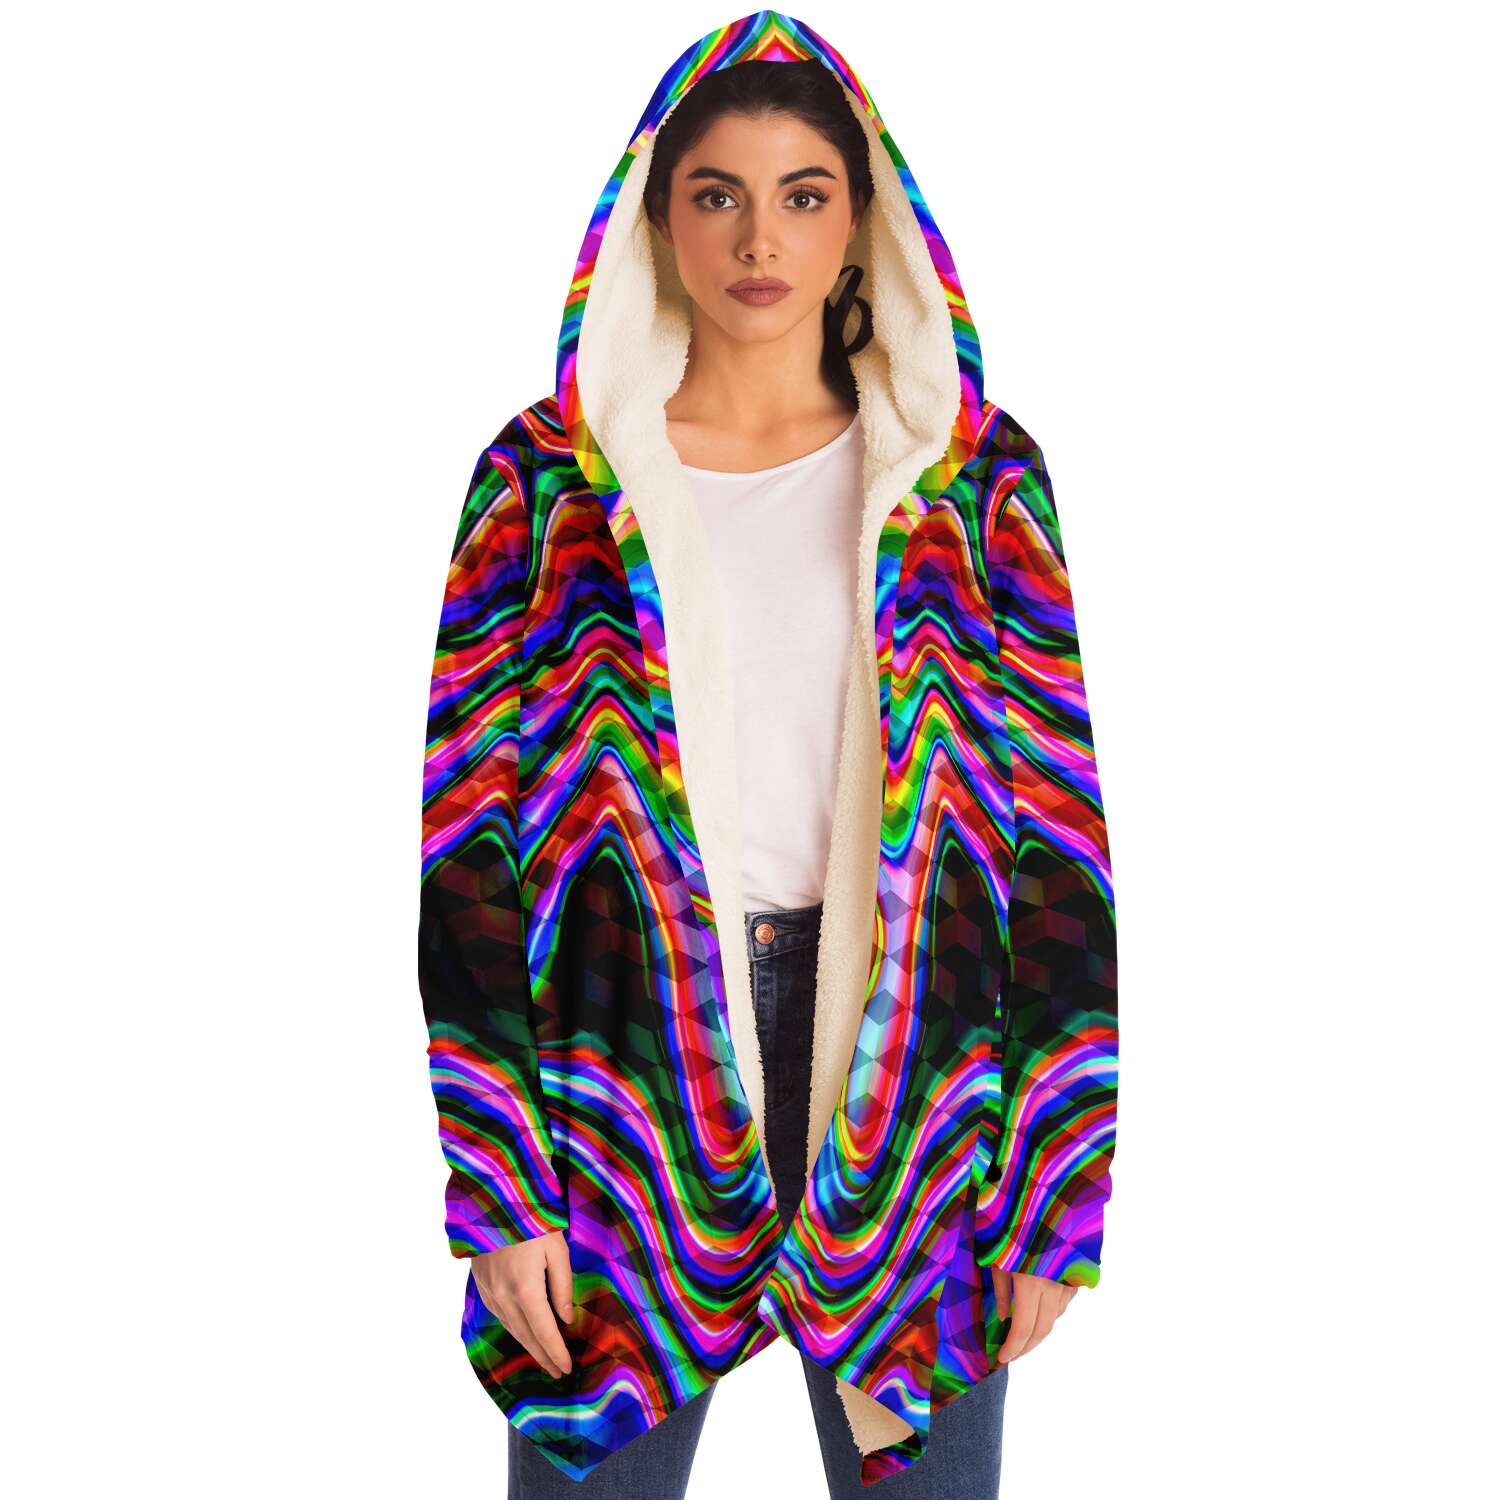 Euphoric Rave Cloak With Hood